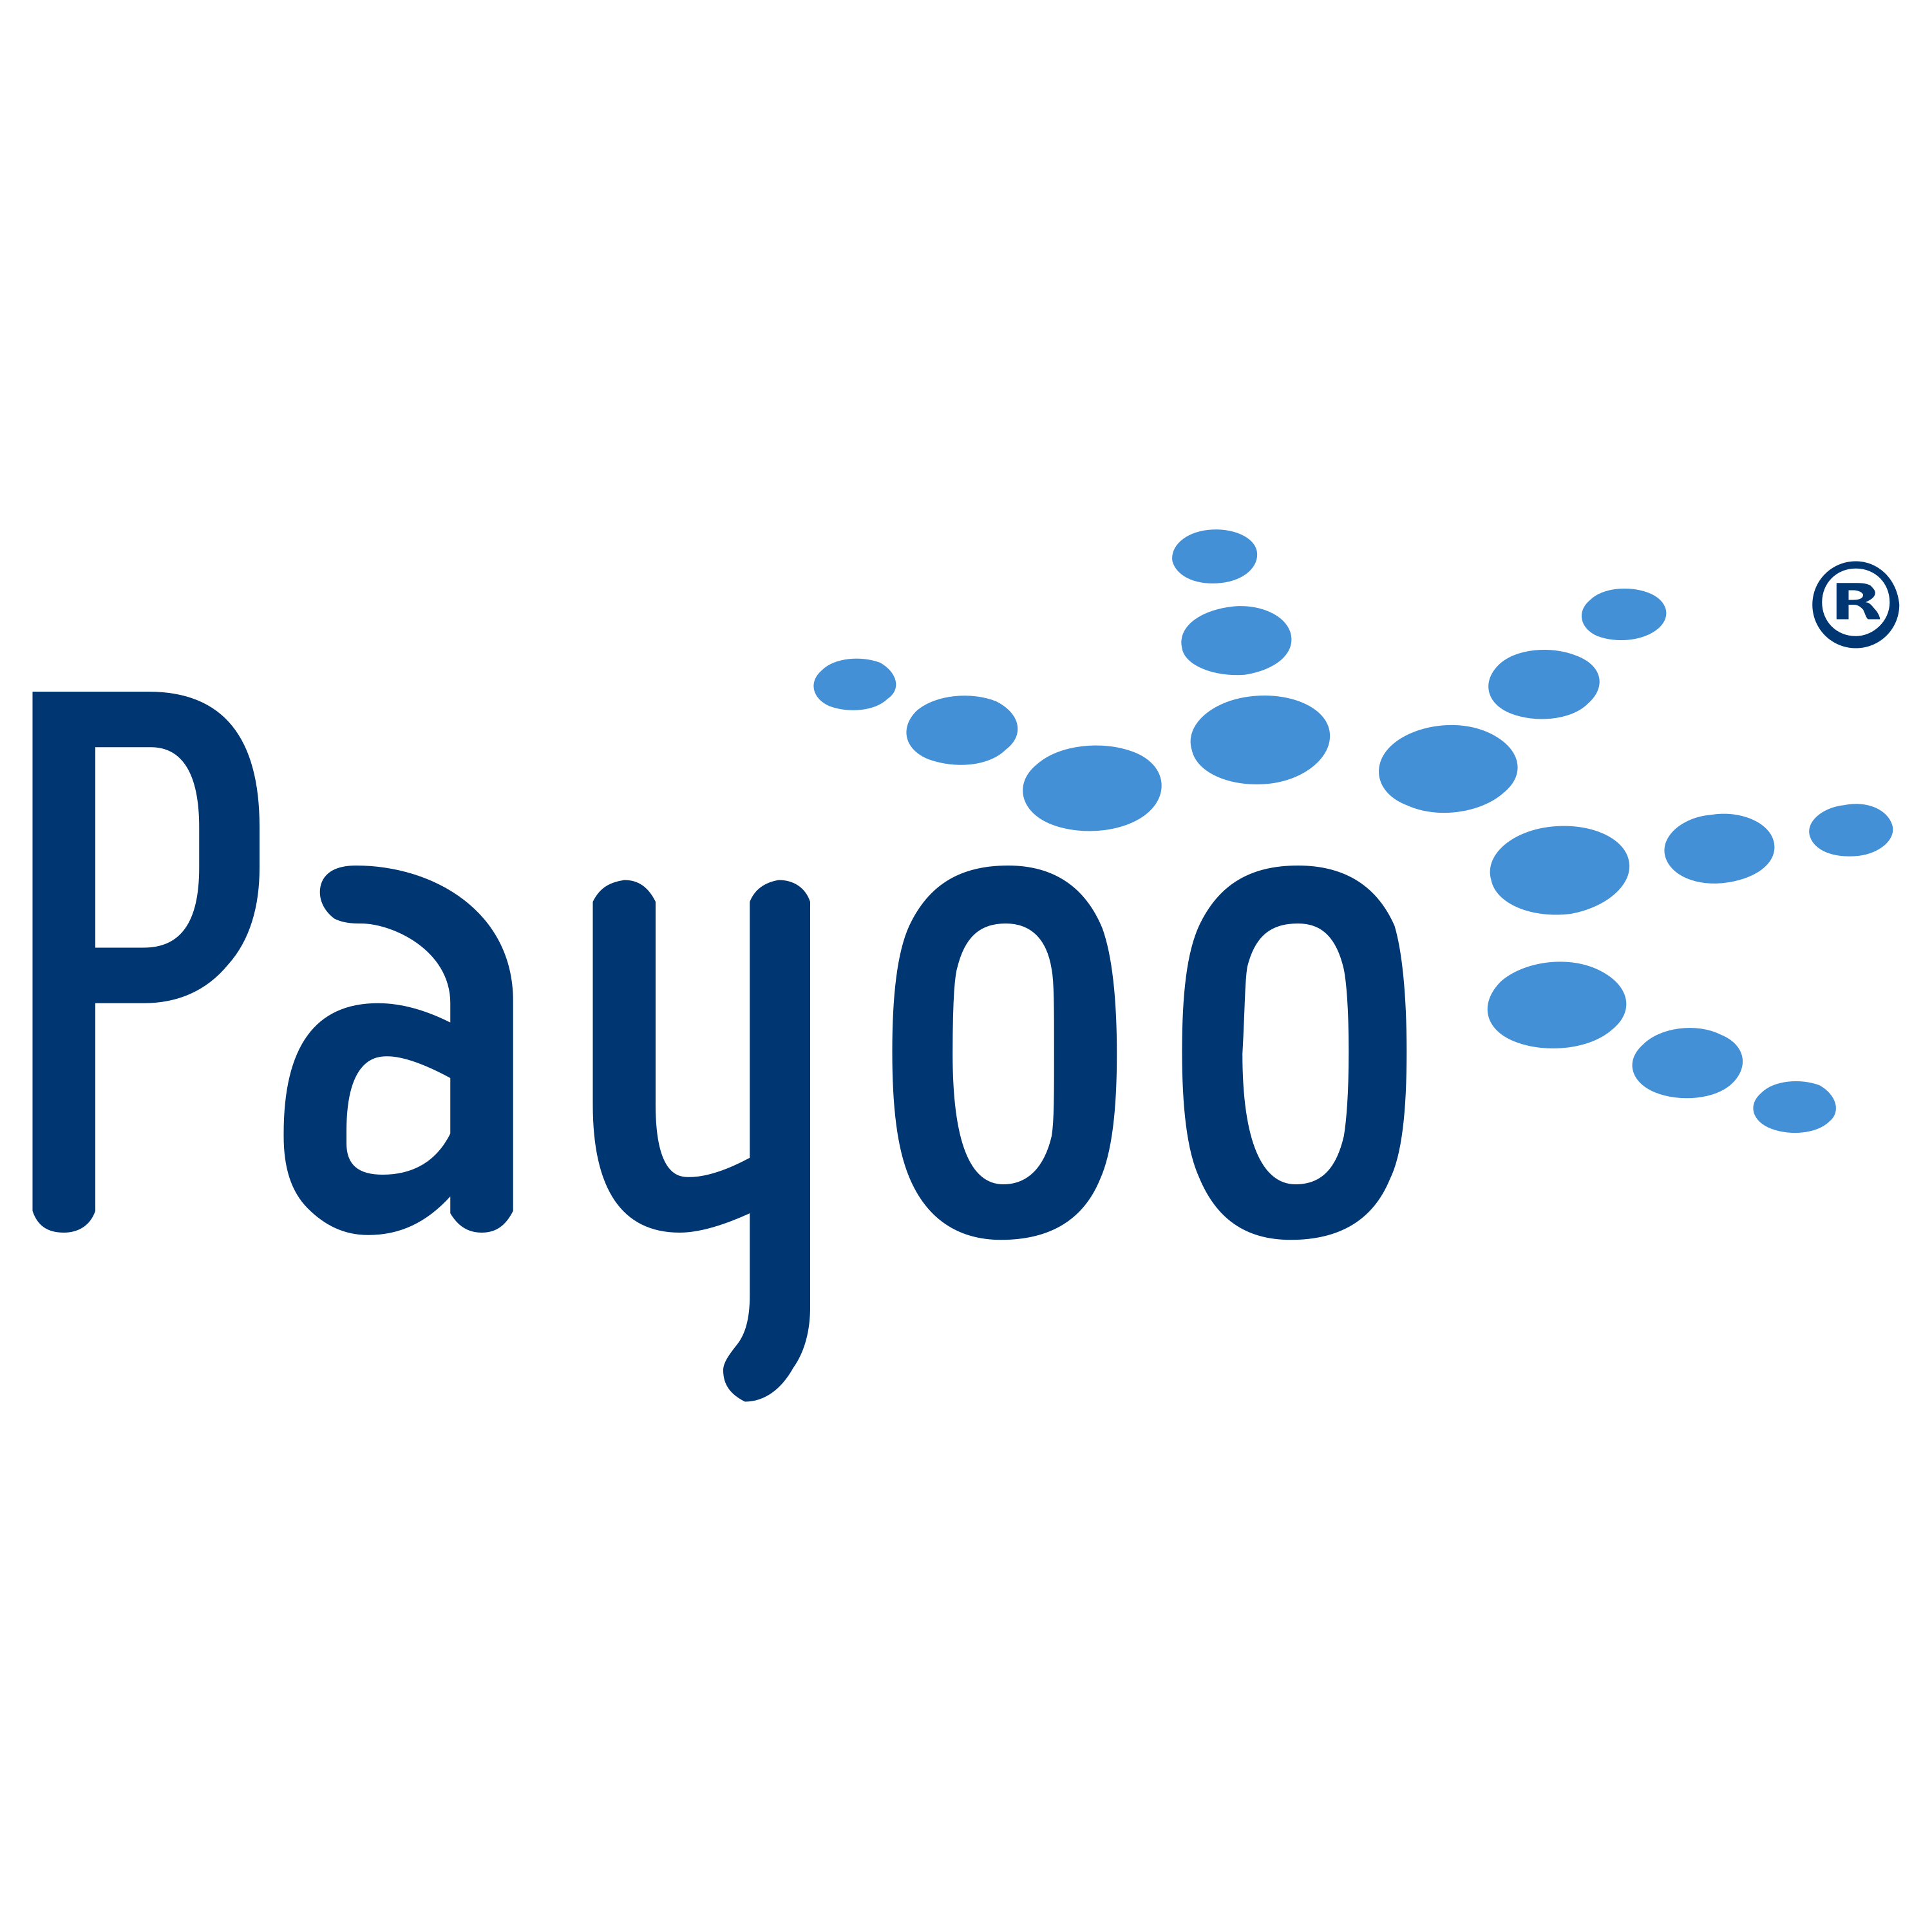 Payoo Logo  Transparent Photo